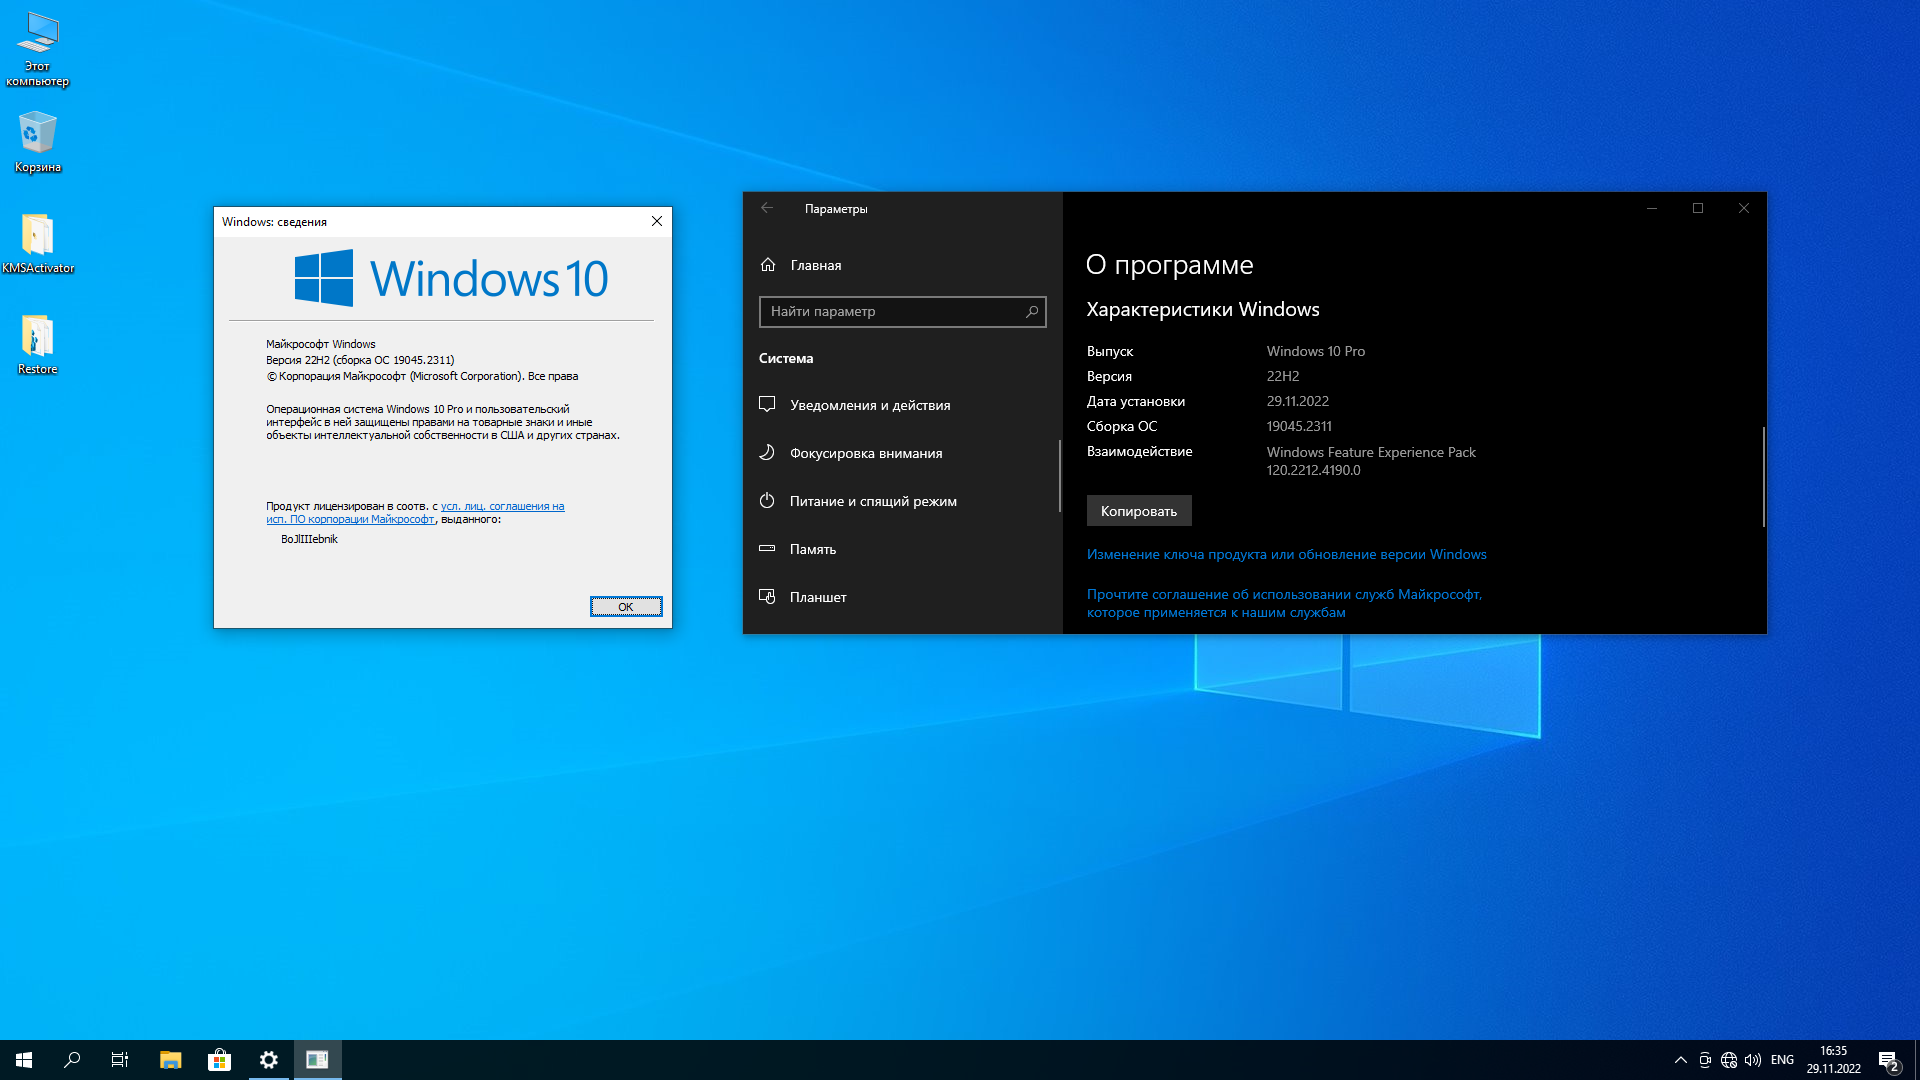 Windows 10 home 22h2 64 bit. Windows 10, версия 22h2. Windows 10 2022 l версия 22h2. Вторая версия Windows. Windows 10 домашняя 22h2.